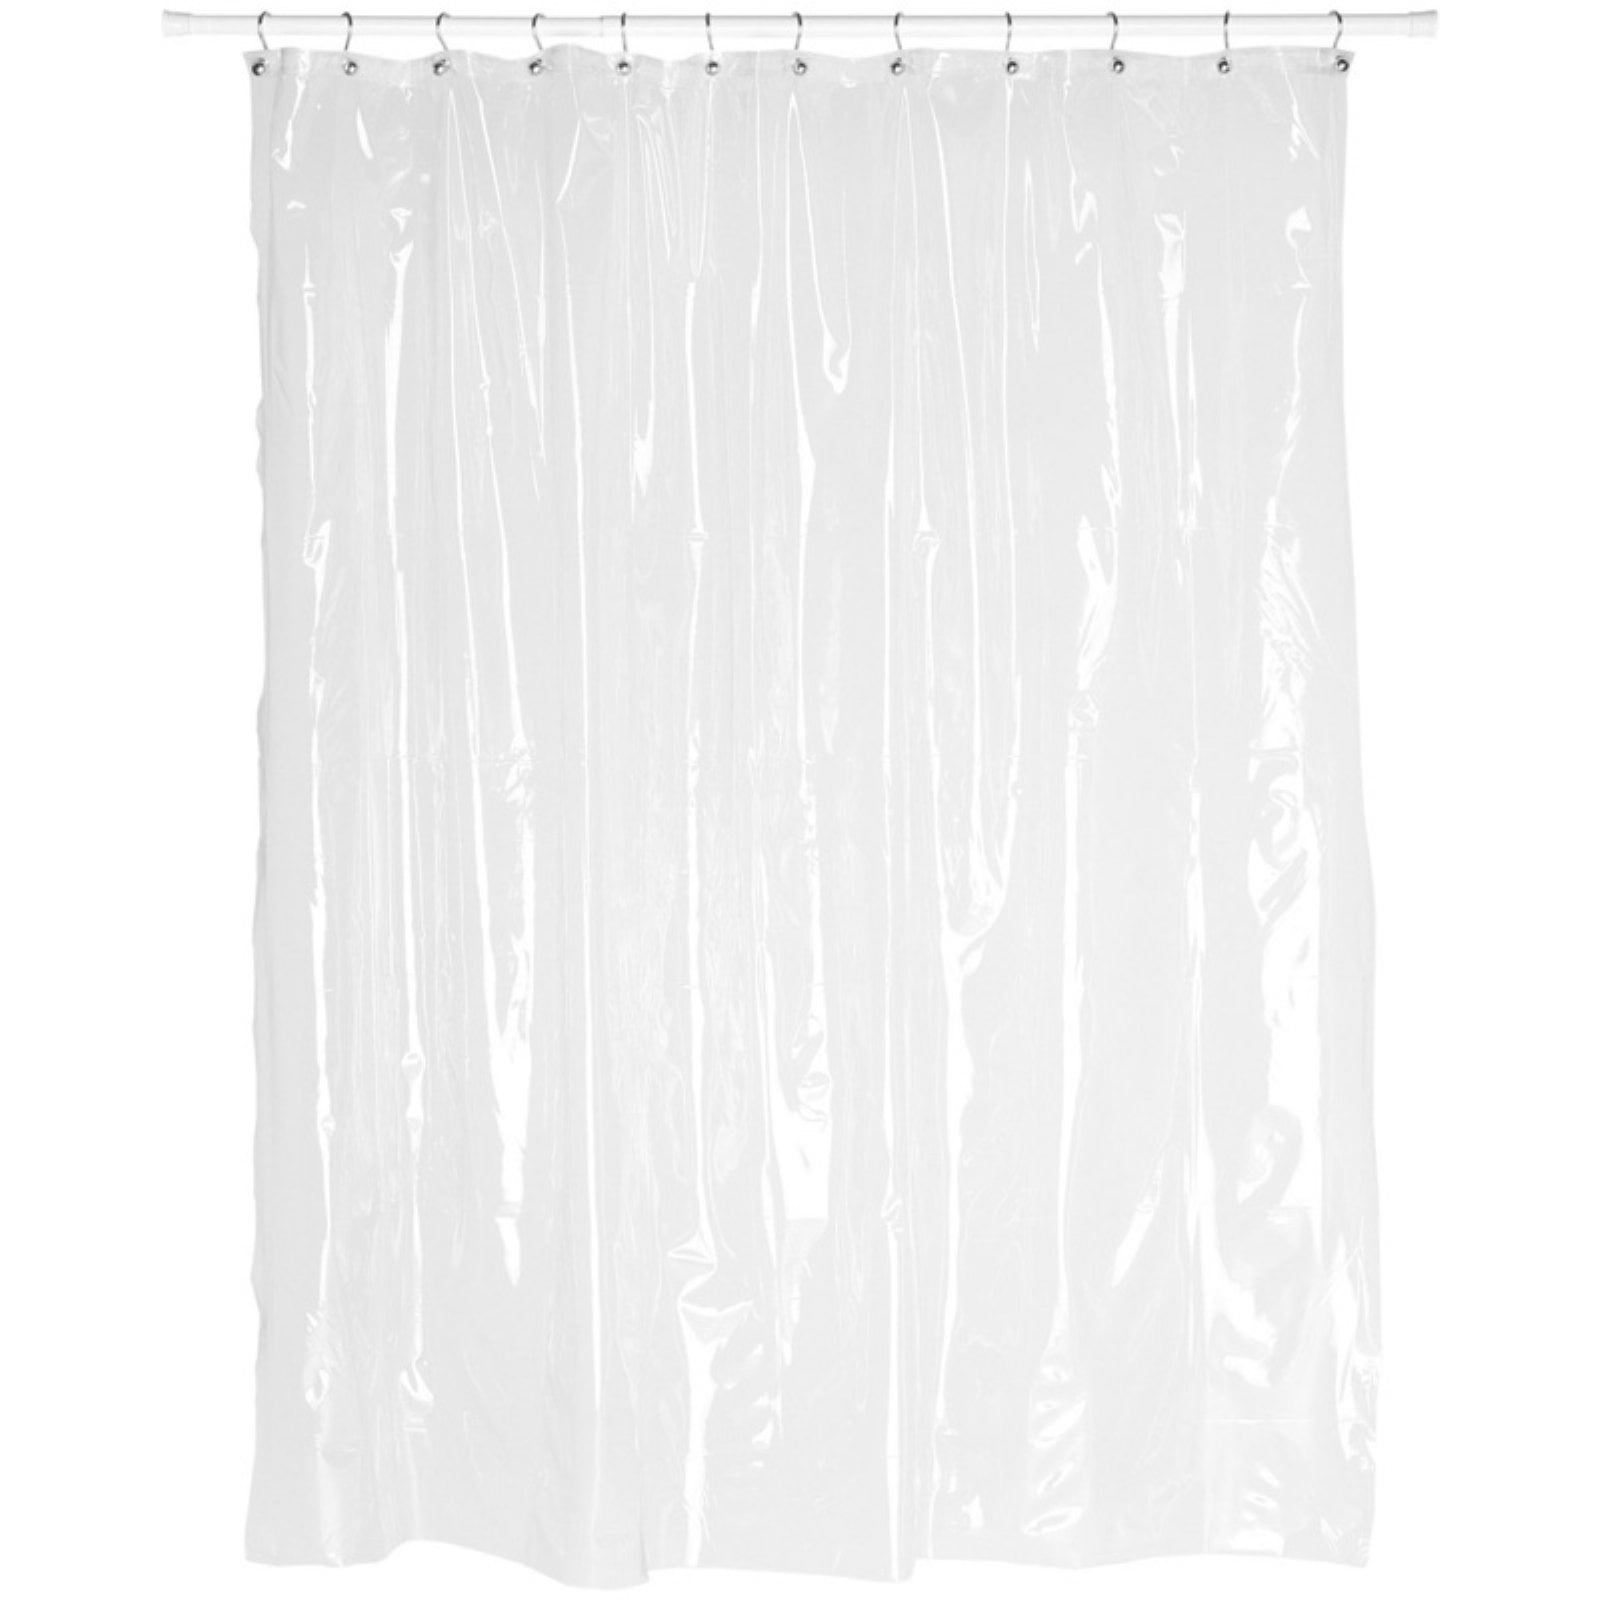 Idesign Eva 5 Gauge Shower Curtain, 54 Inch Shower Curtain Liner